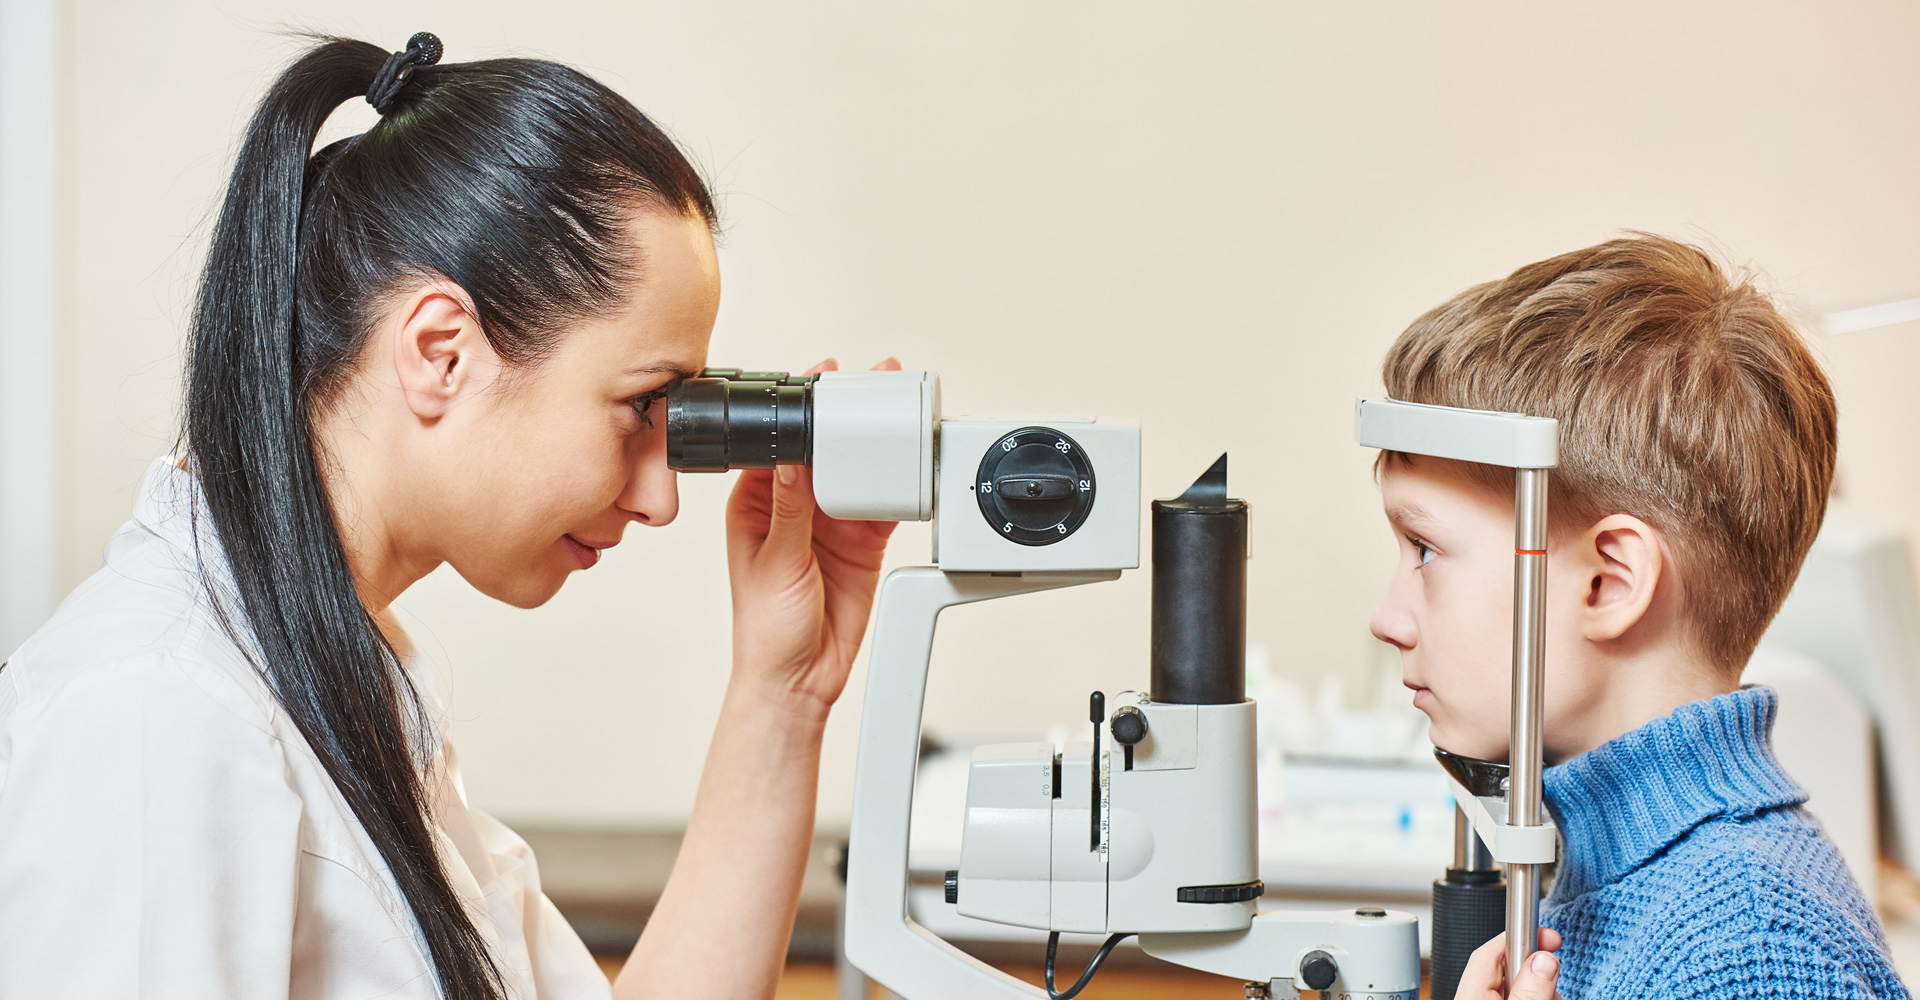 International optometrist jobs